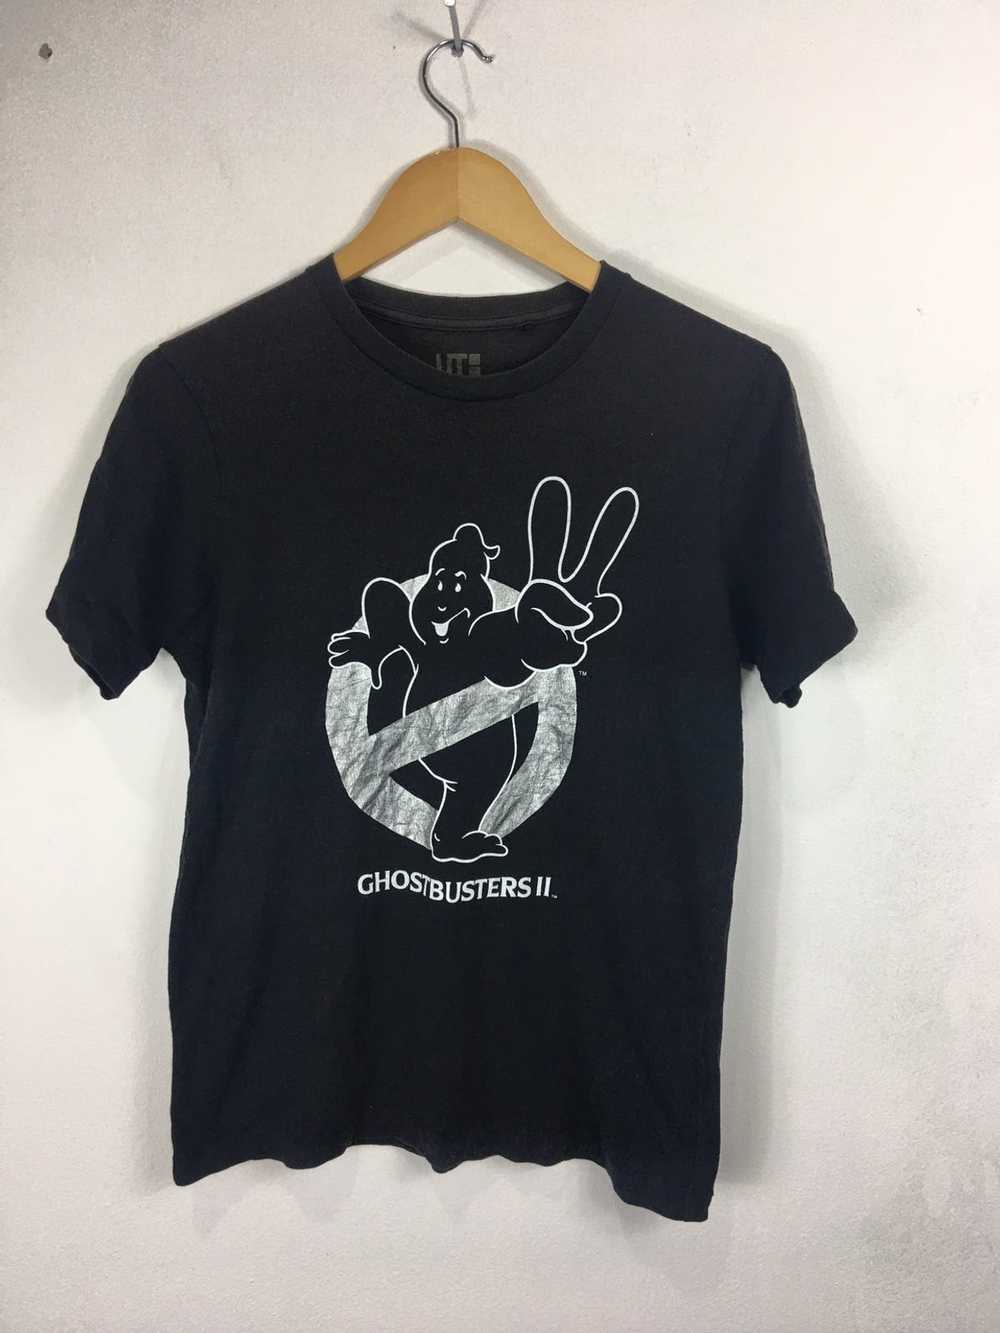 Uniqlo Ghostbusters 2 movie film promo shirt - image 1